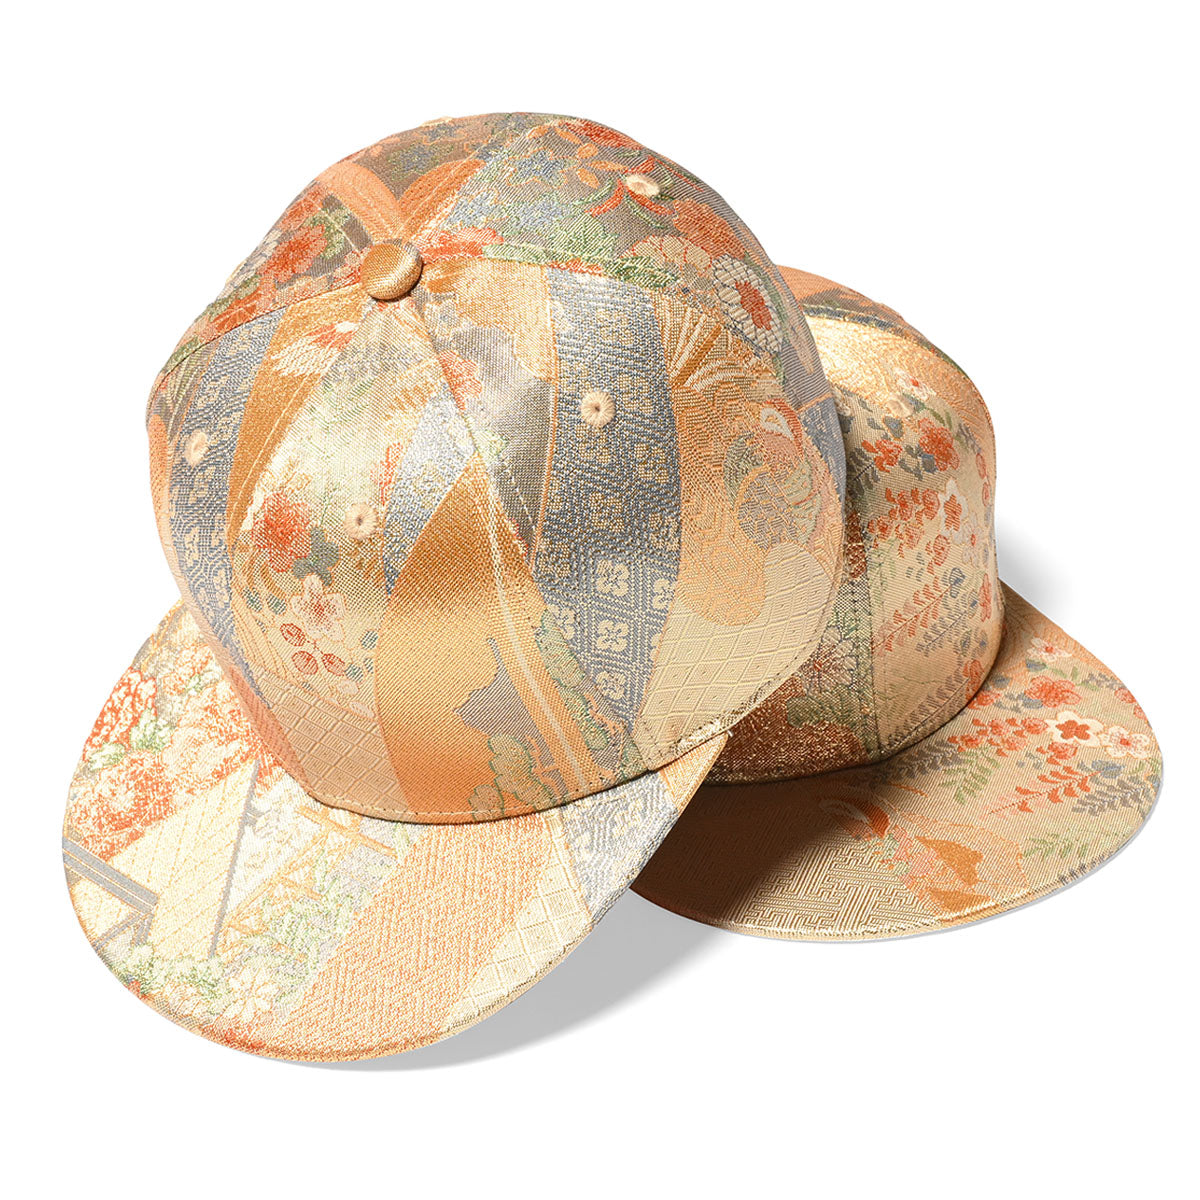 HOMEGAME - TYPE3 KIMONO TRADITIONAL JAPANESE FABRIC SNAPBACK CAP